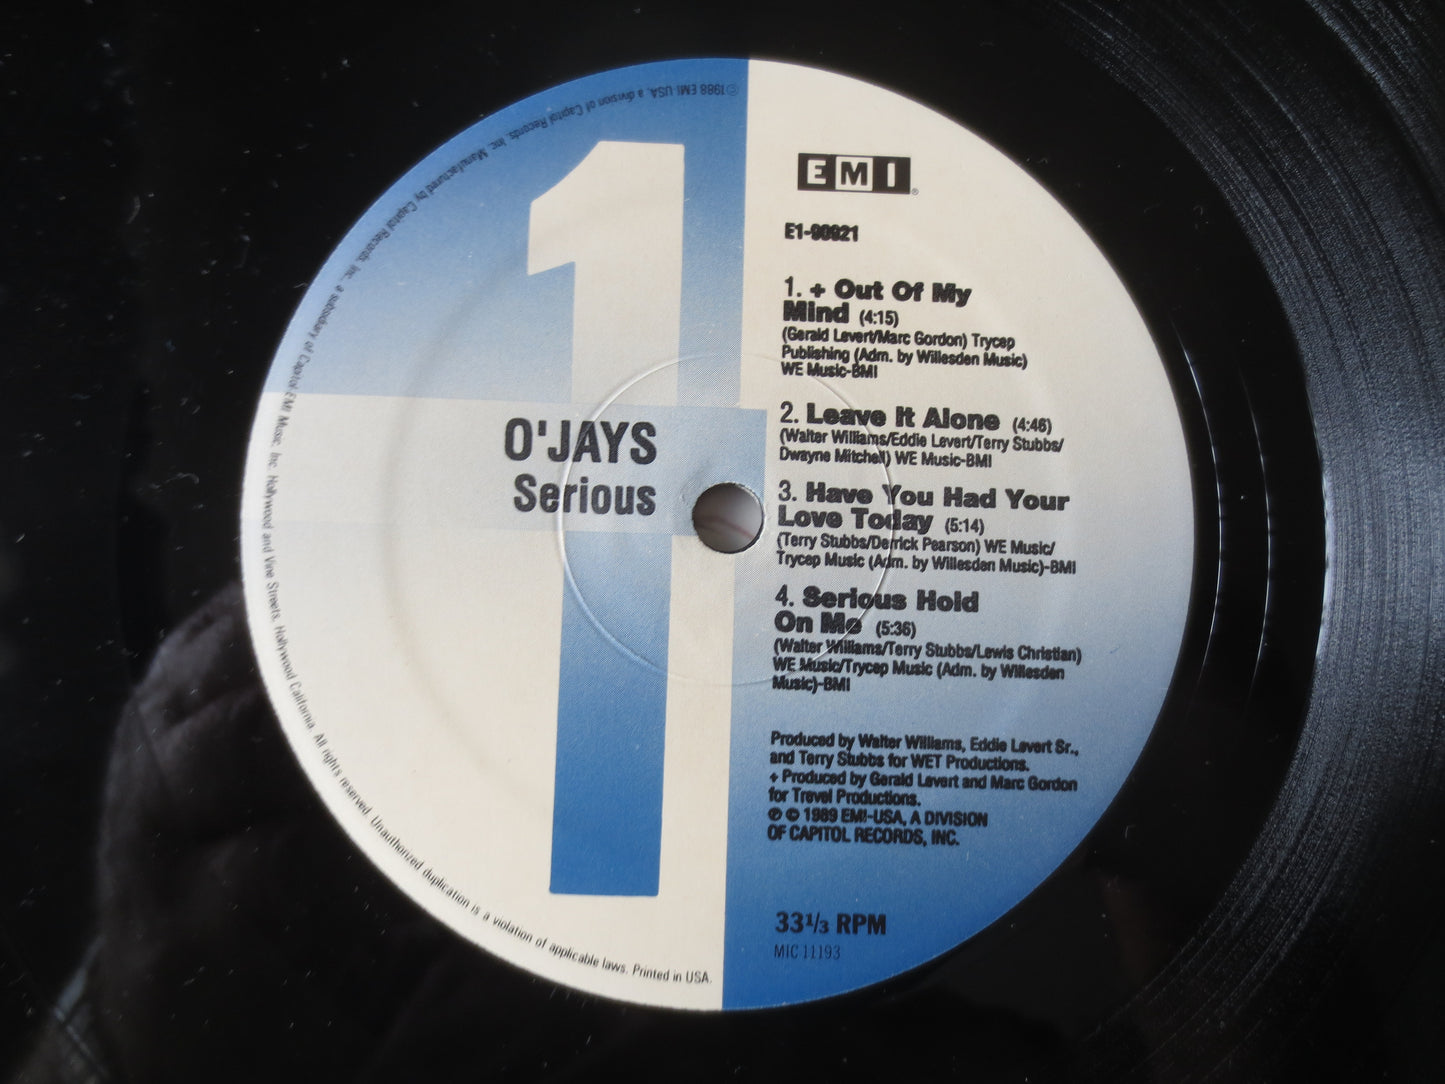 The O'JAYS, SERIOUS, The O'JAYS lp, Vintage Vinyl, Record Vinyl, Record, Vinyl Record, Vinyl, Disco Records, 1989 Records